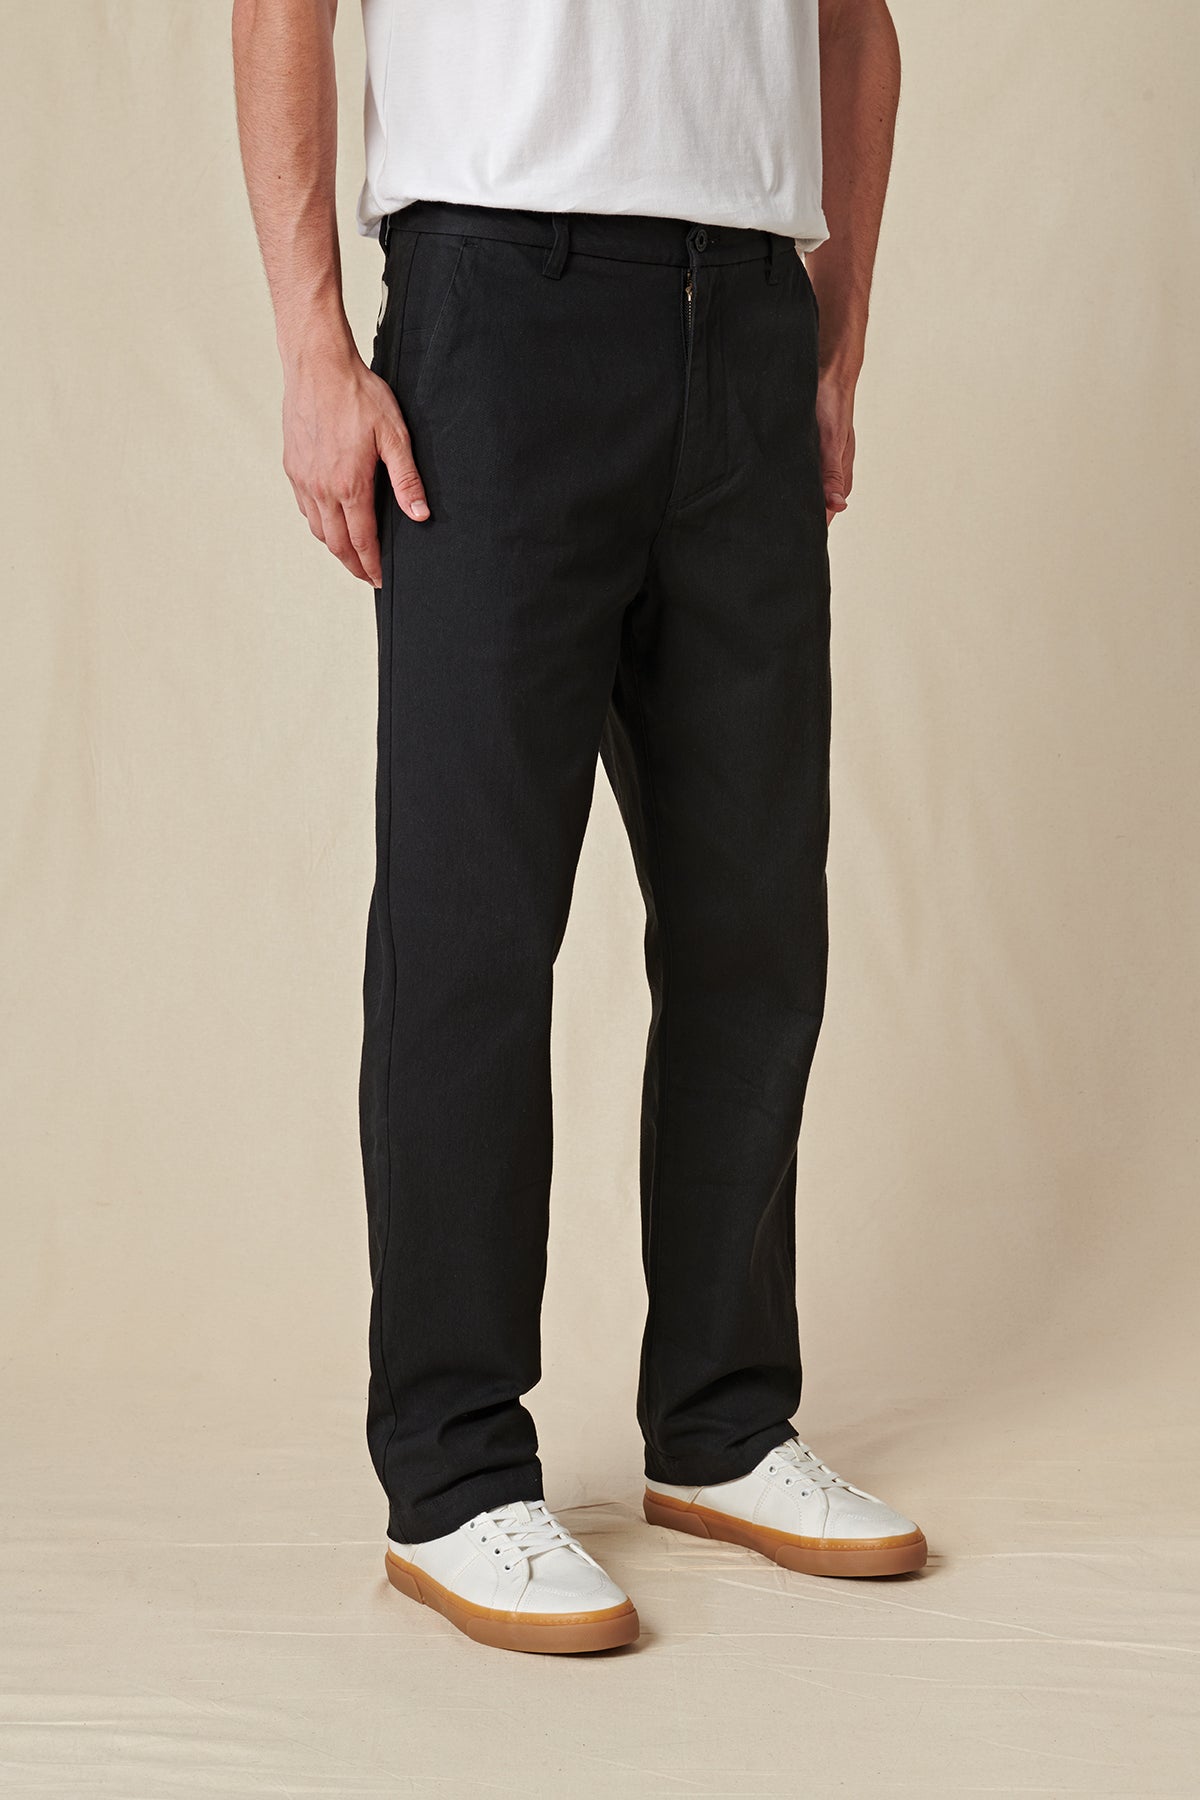 Side profile of Black Globe Pants. 